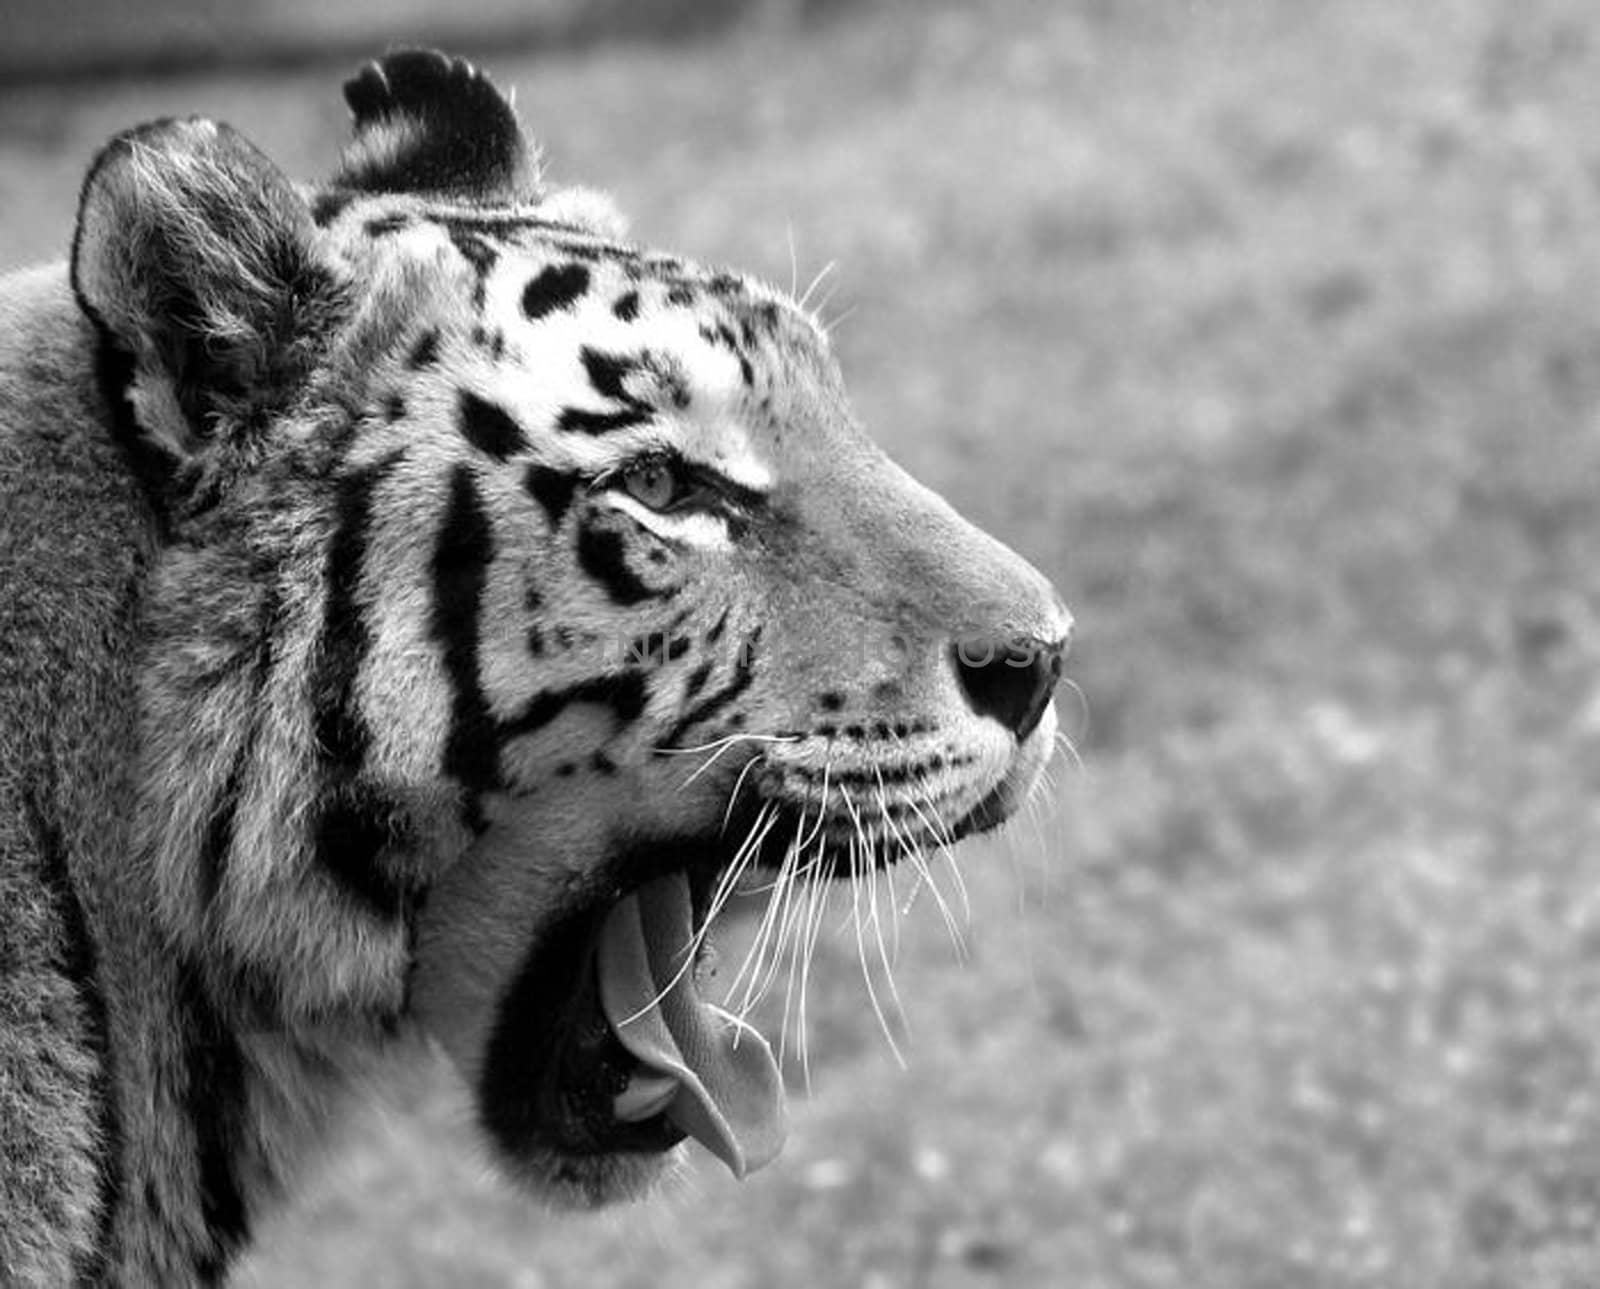 Tiger Yawn by quackersnaps